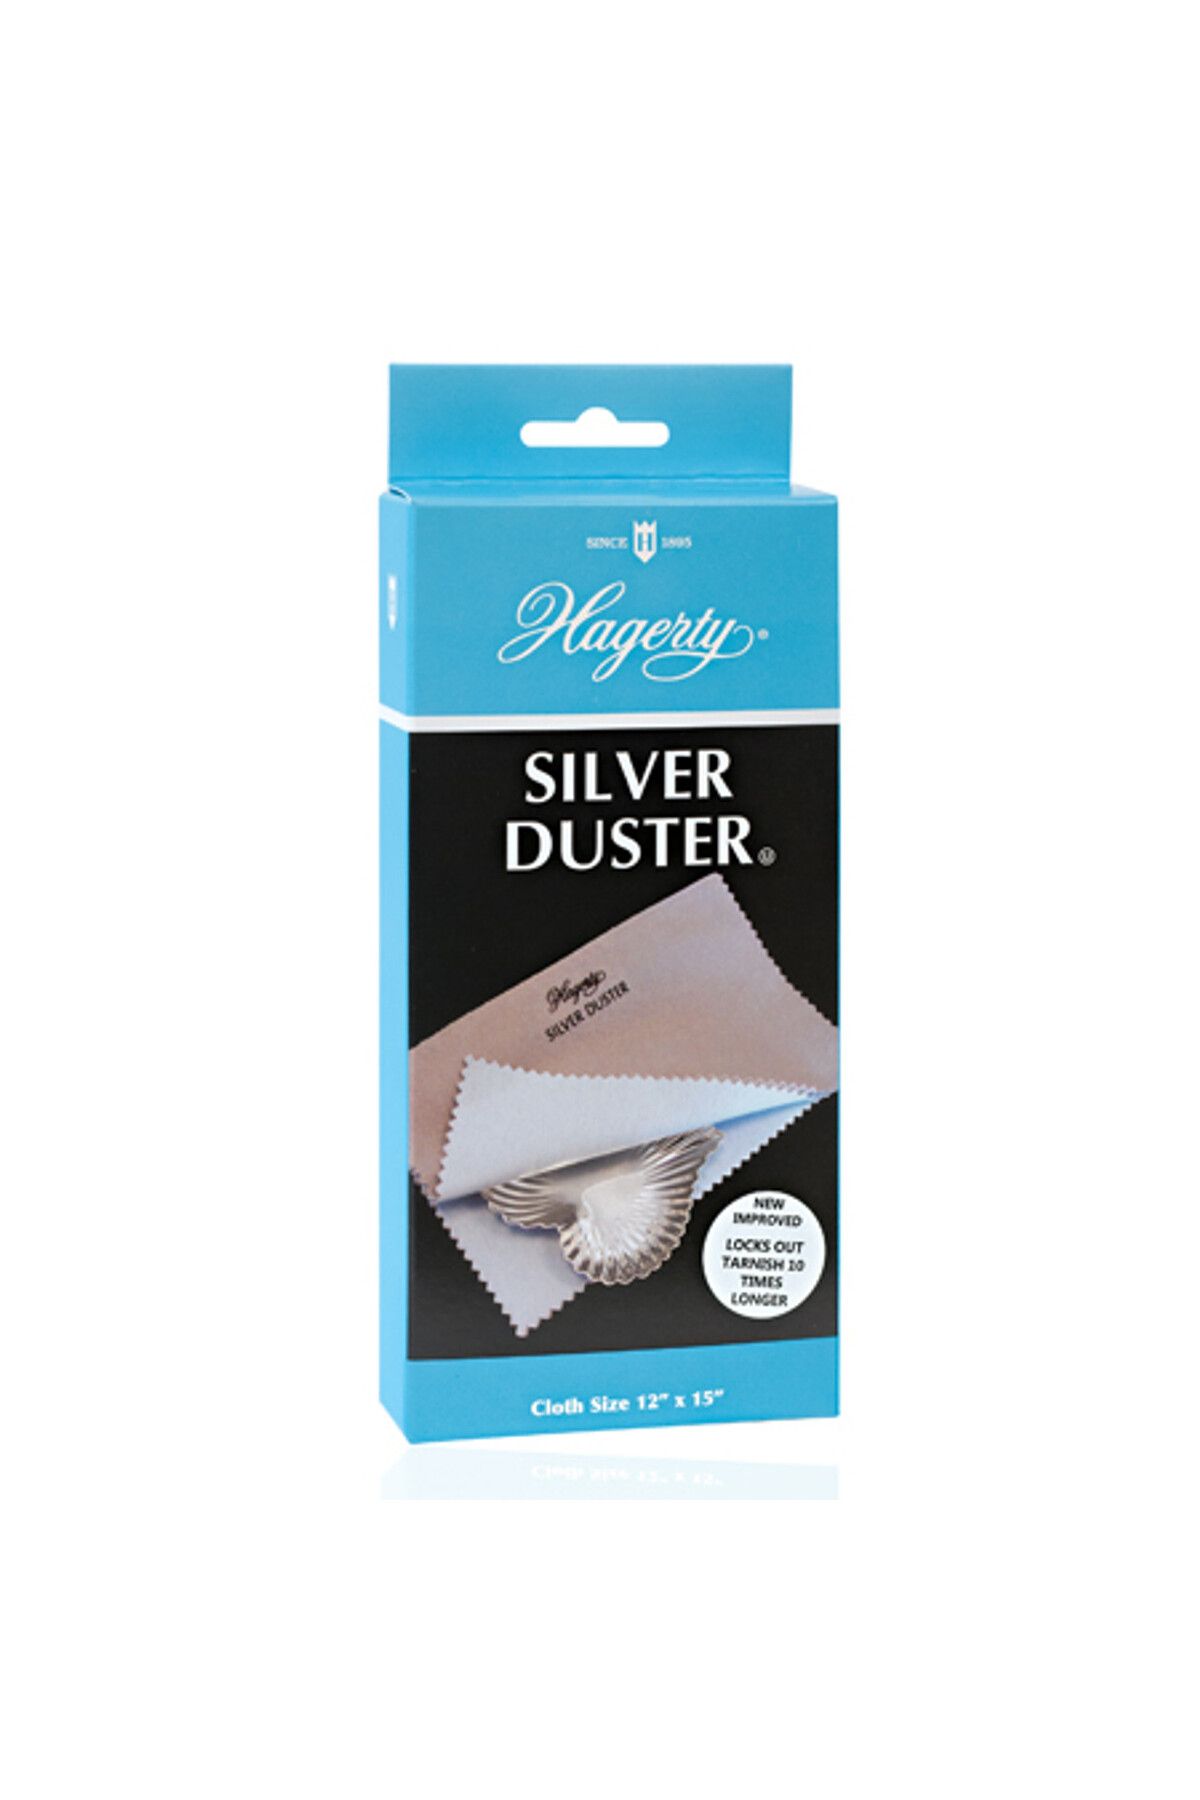 Clorox Sılver Duster Cloth 12"X15" Gümüş Temizleme Bezi